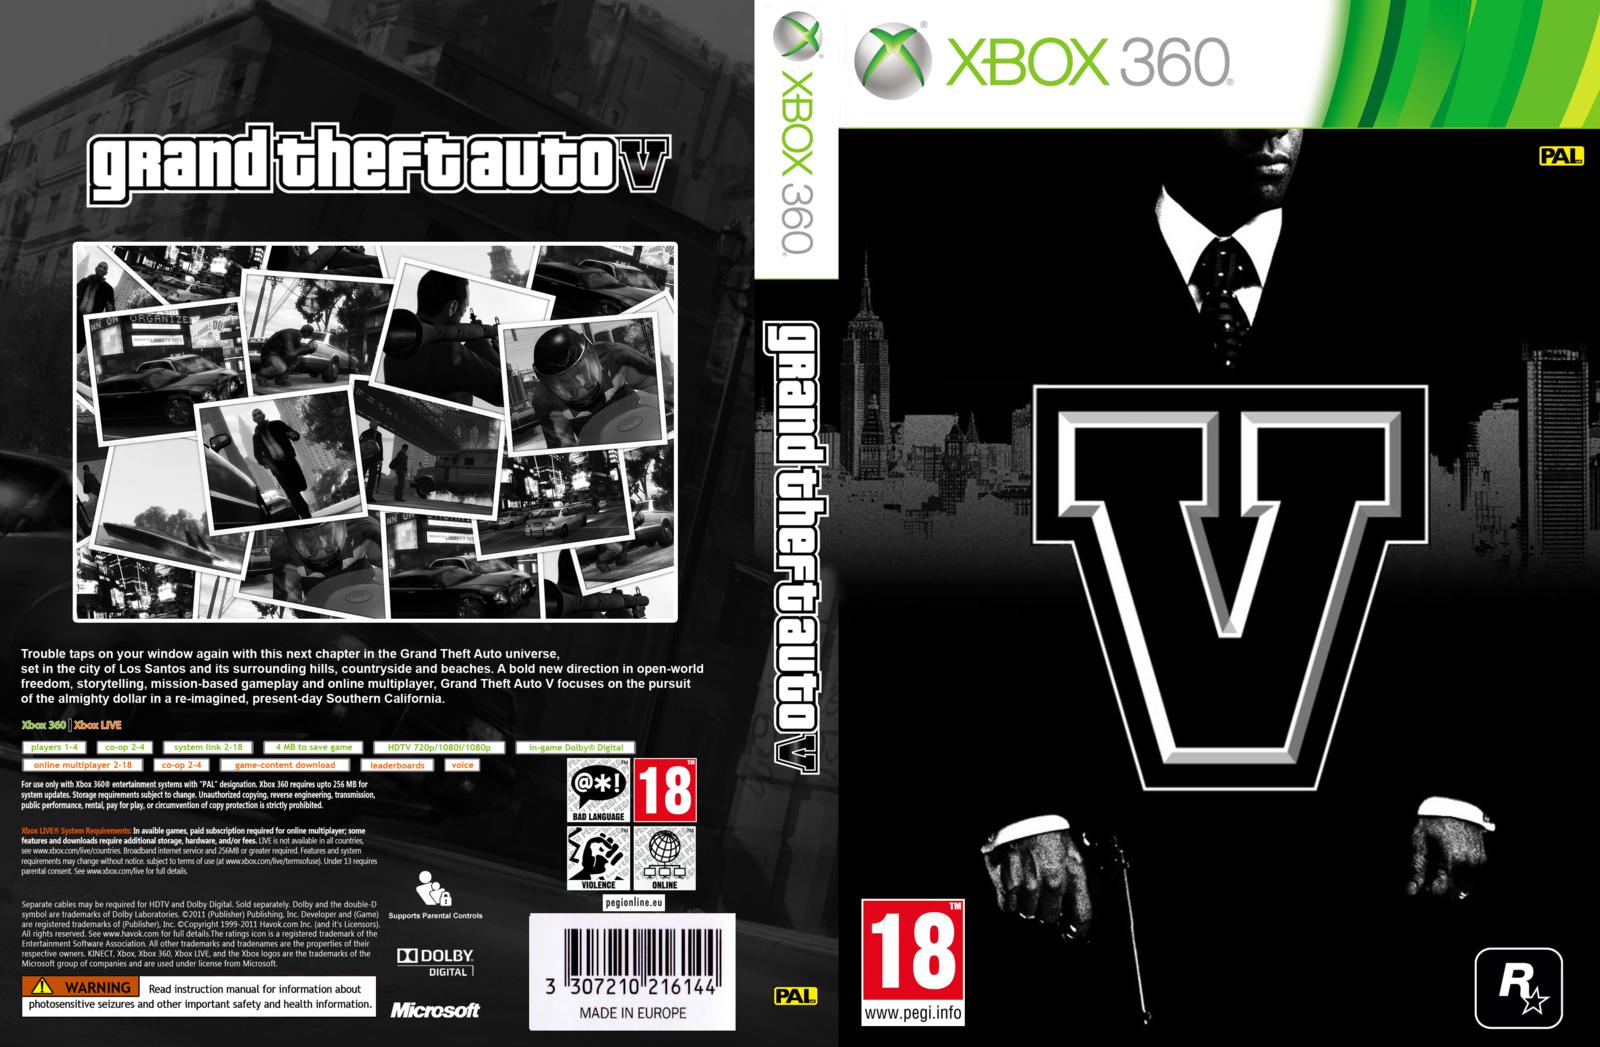 Как запустить игру на xbox 360. Grand Theft auto IV Xbox 360 обложка. GTA 5 Xbox 360 обложка. Grand Theft auto v обложка Xbox 360. GTA 5 Xbox 360 обложка диска.